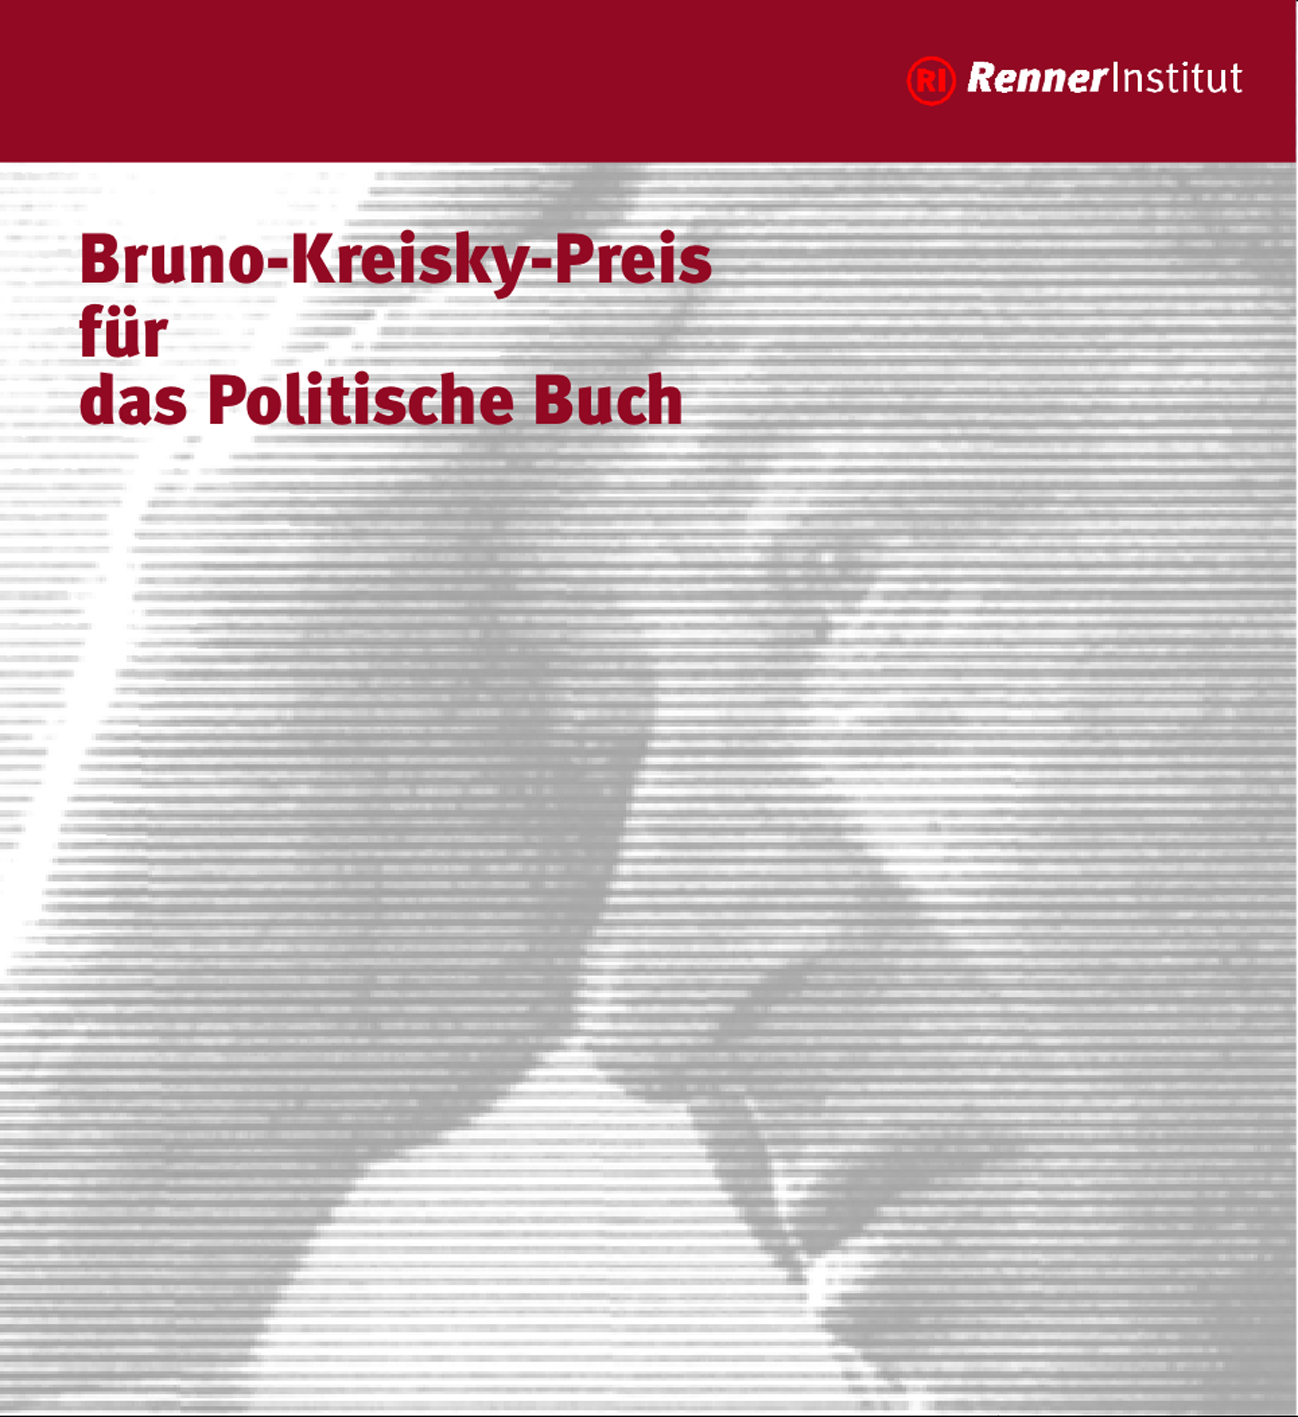  Design for the Bruno-Kreisky-Preis, Renner-Institut, Academy of the Austrian Social Democratic Party  